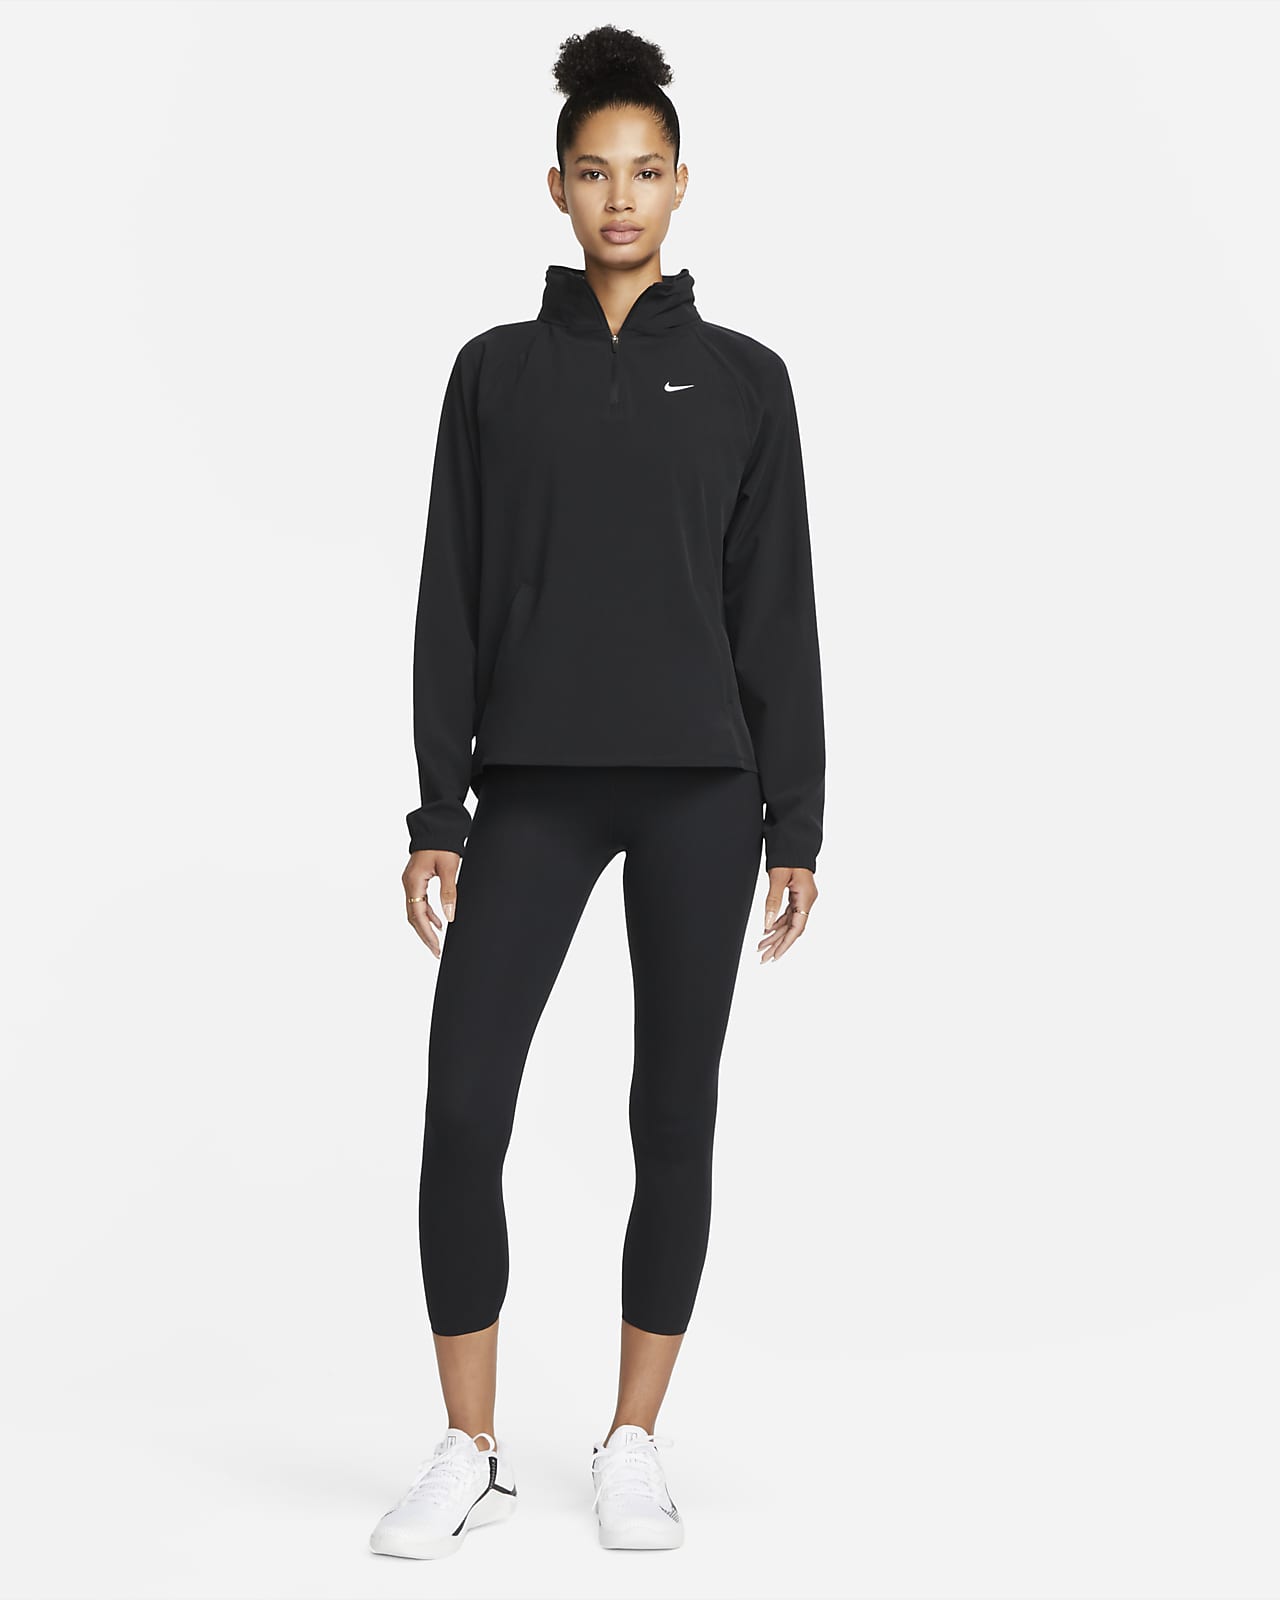 Legginsy damskie treningowe Nike One Luxe AT3098 / 010/black/clear